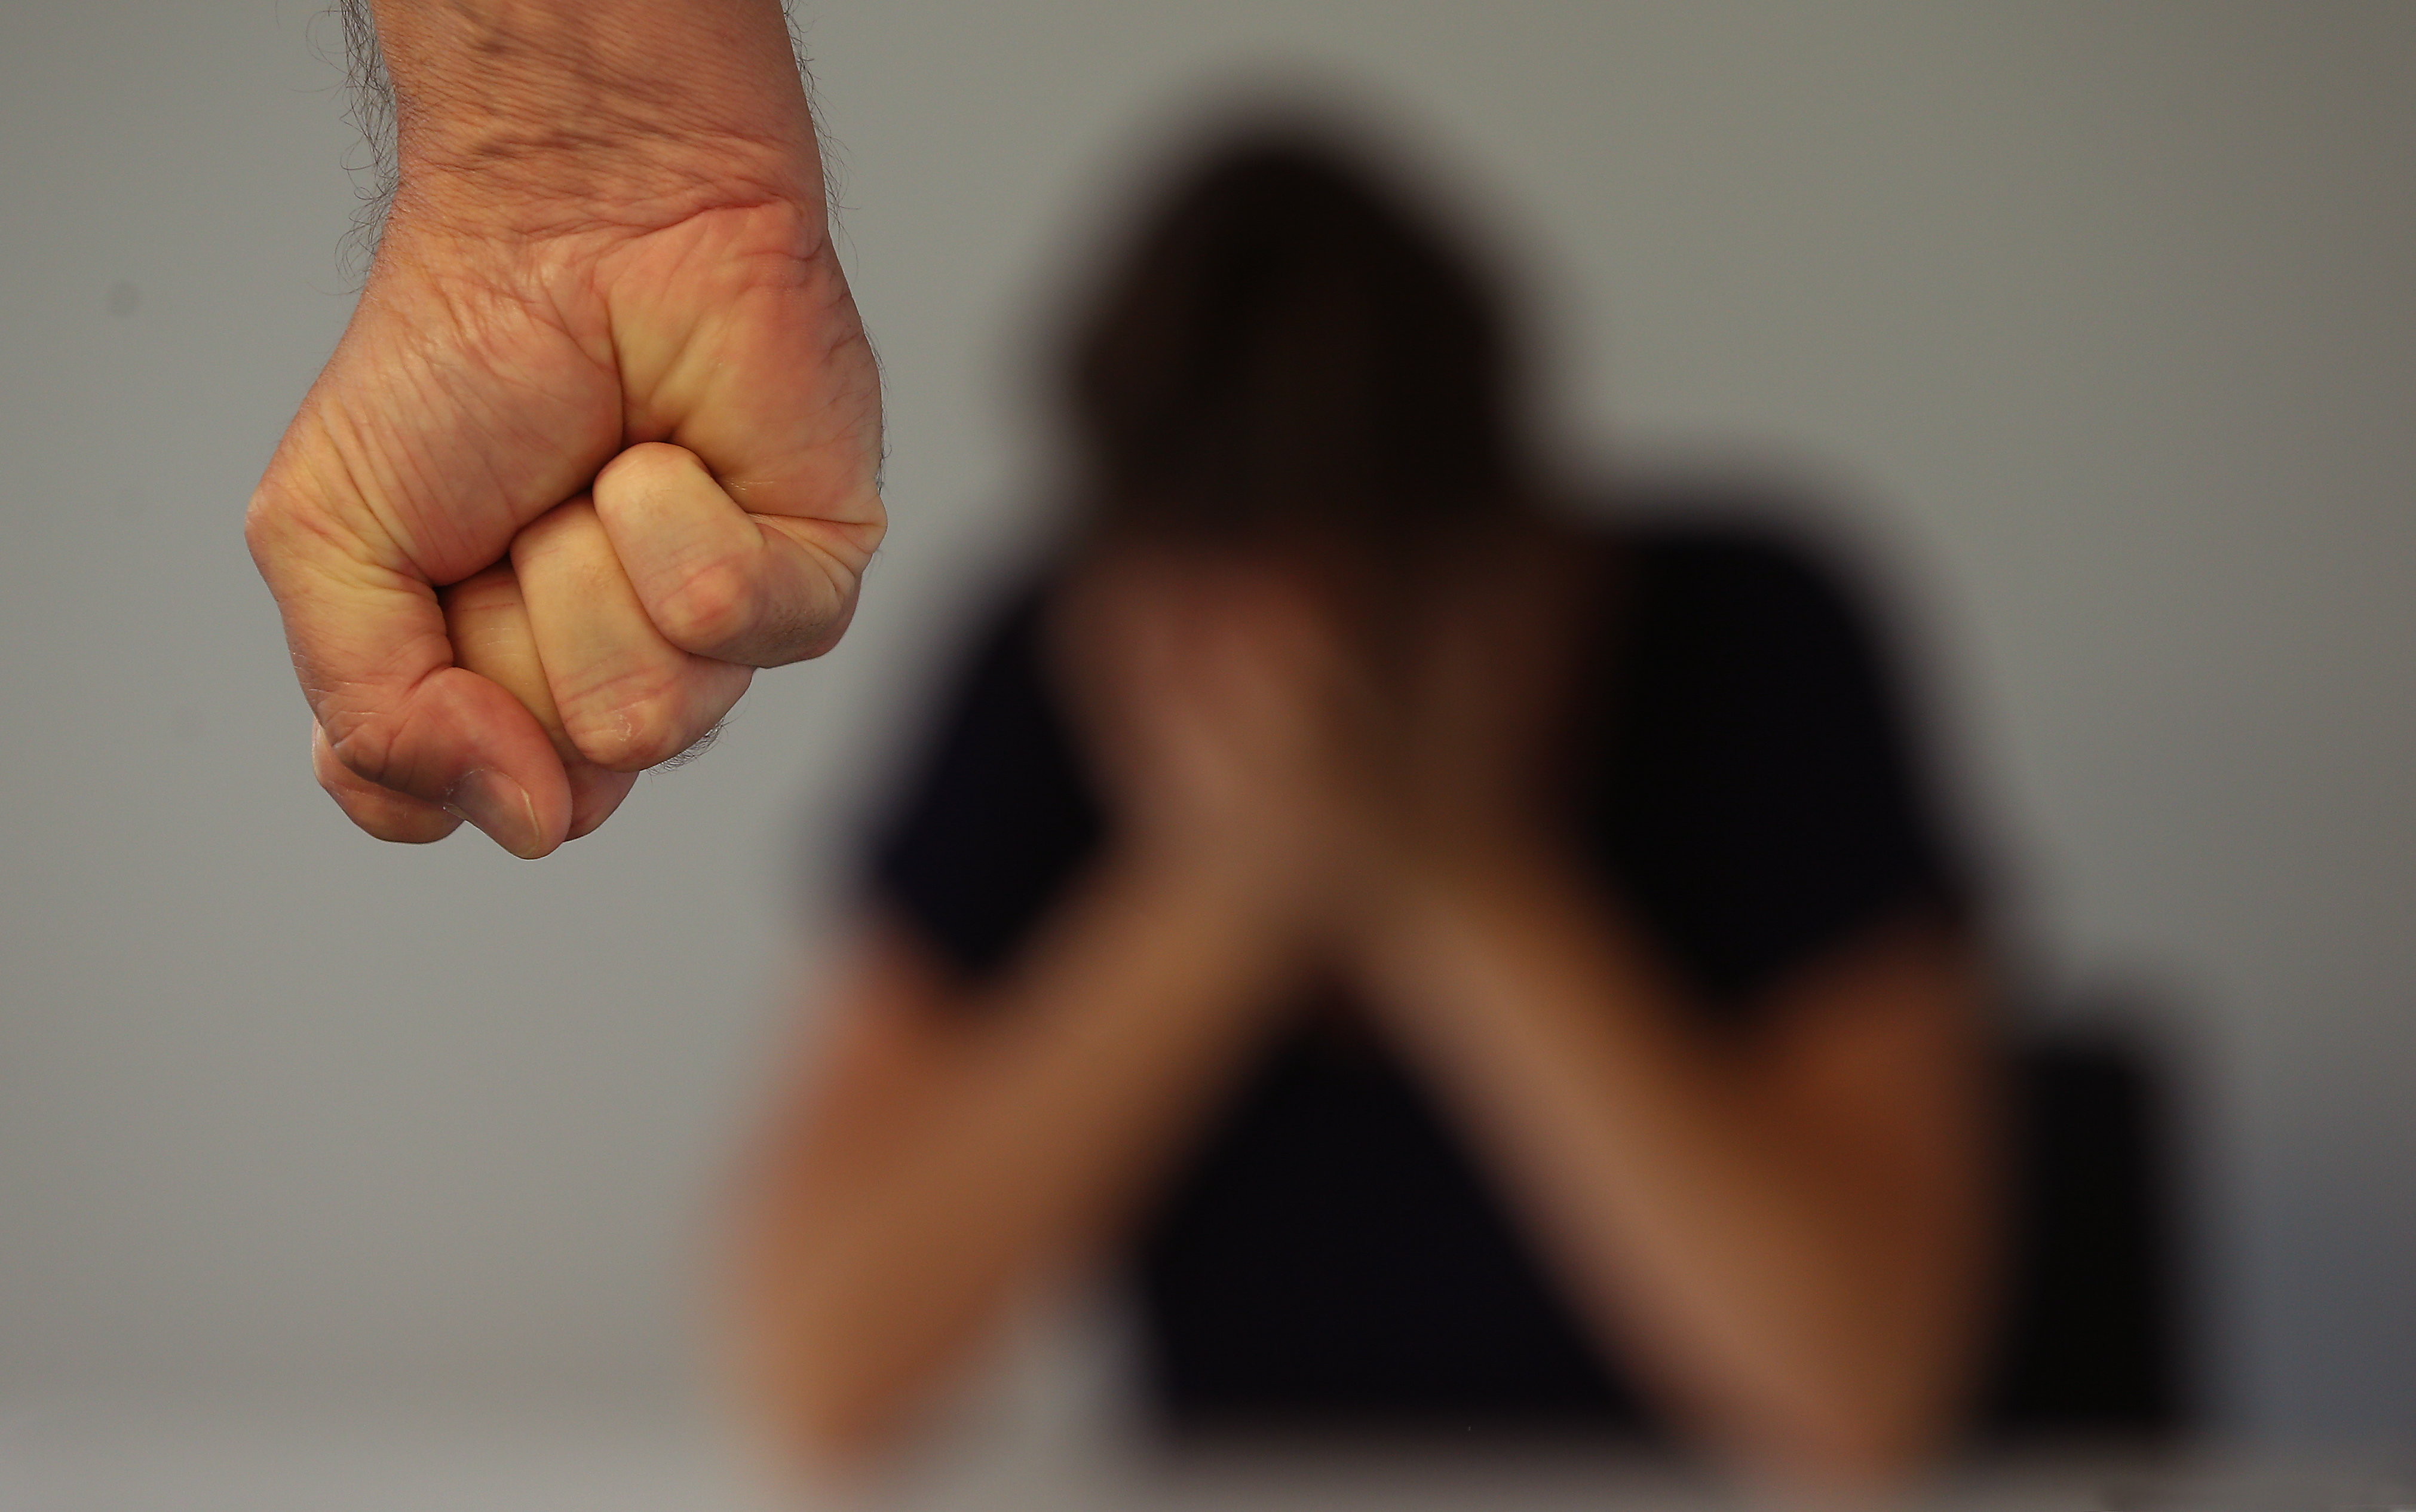 Domestic violence family violence abuse